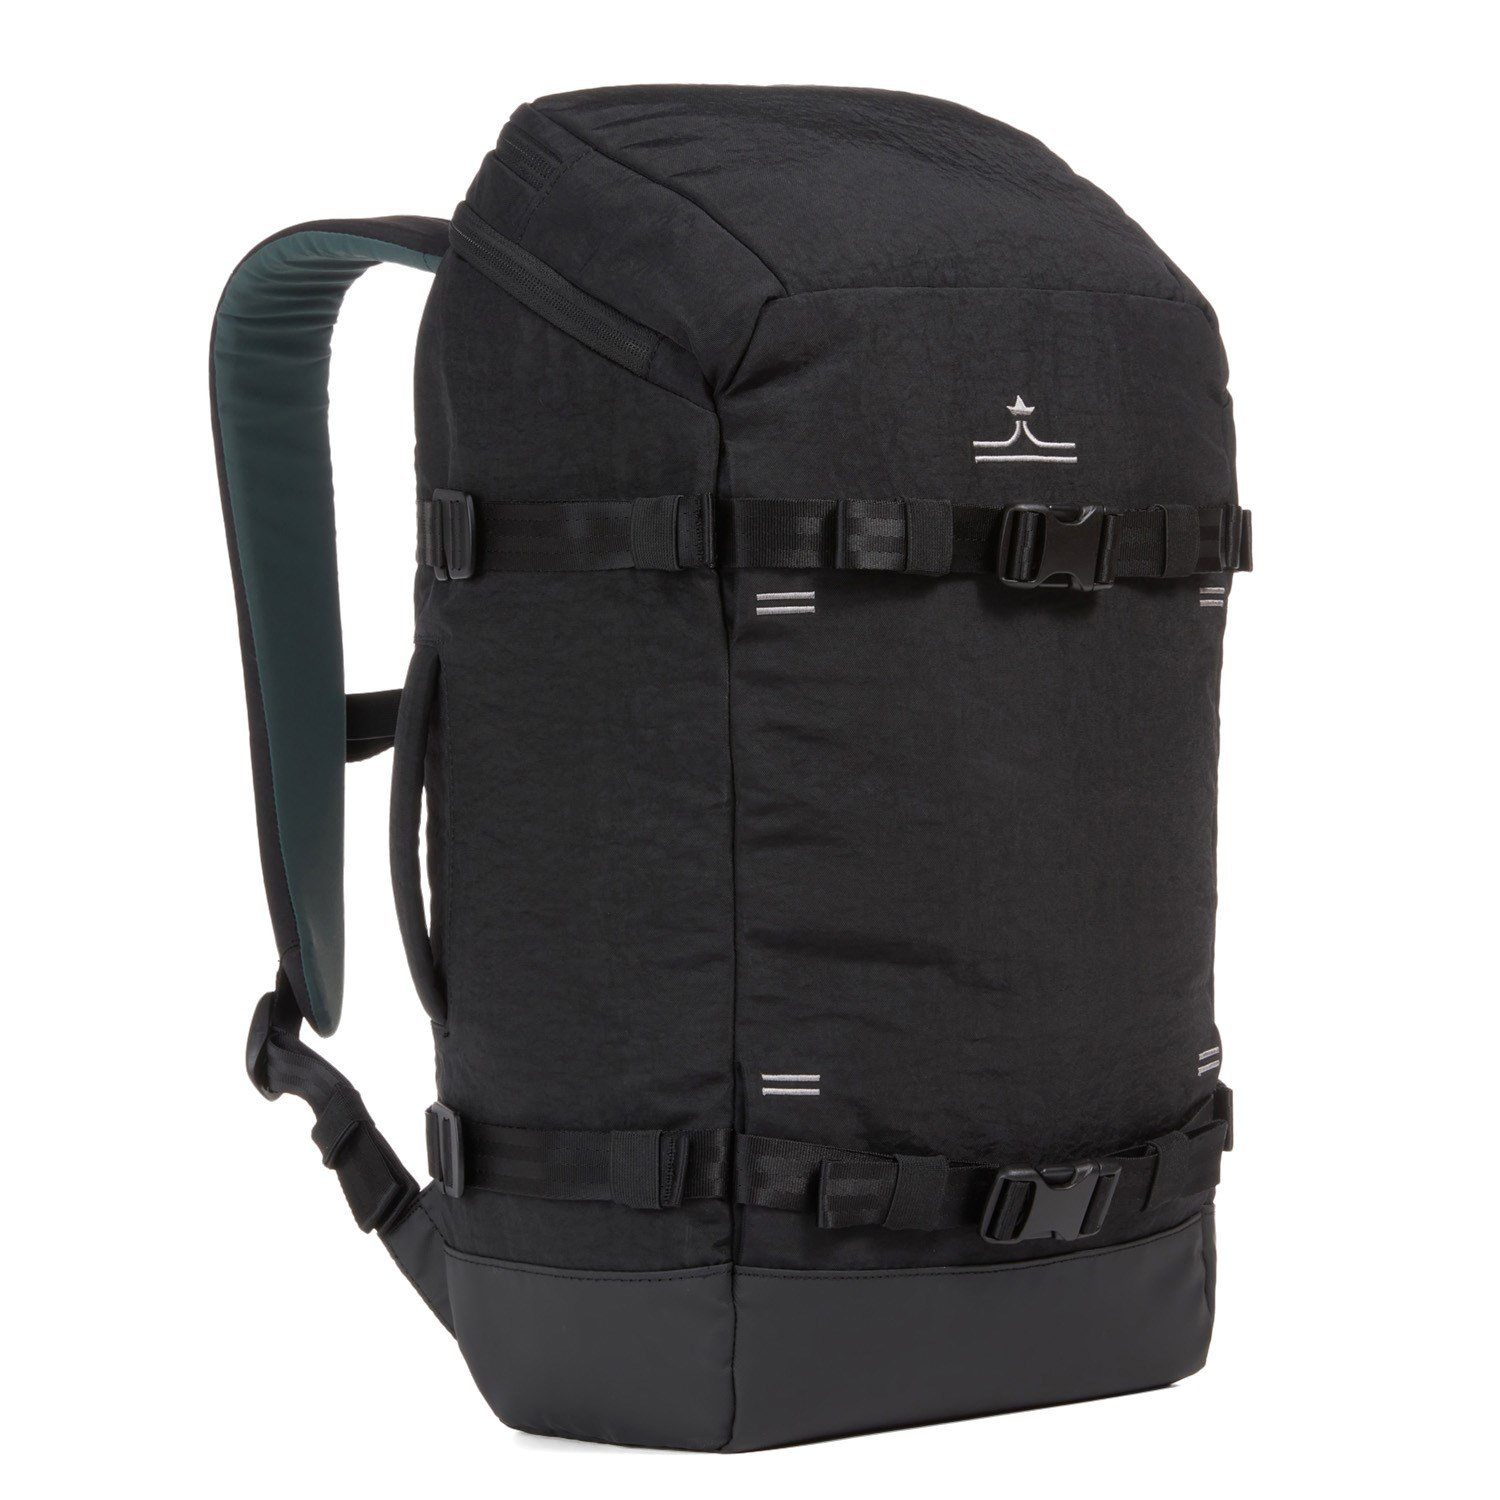  Ultra Comfortable Ergonomic Bag Strap with Cushioned Shoulder  Pad. Fits Duffle, Messenger, Laptop, Gym Bag : Electronics